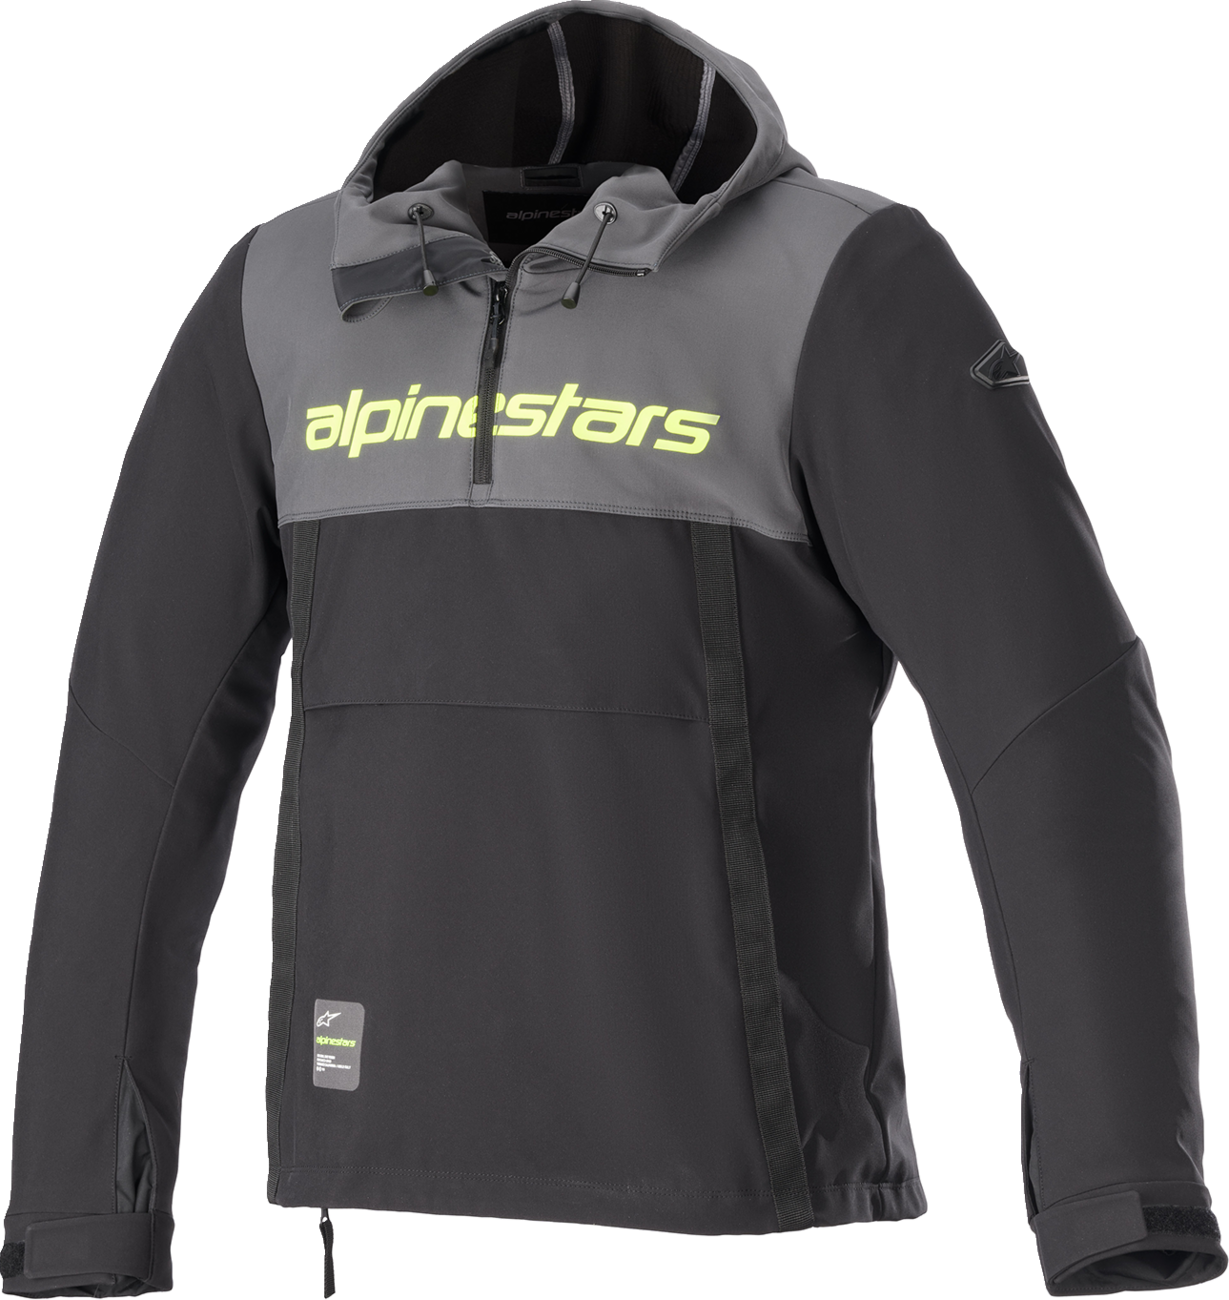 ALPINESTARS Sherpa Jacket - Black/Gray/Yellow - XL 4208123-9151-XL